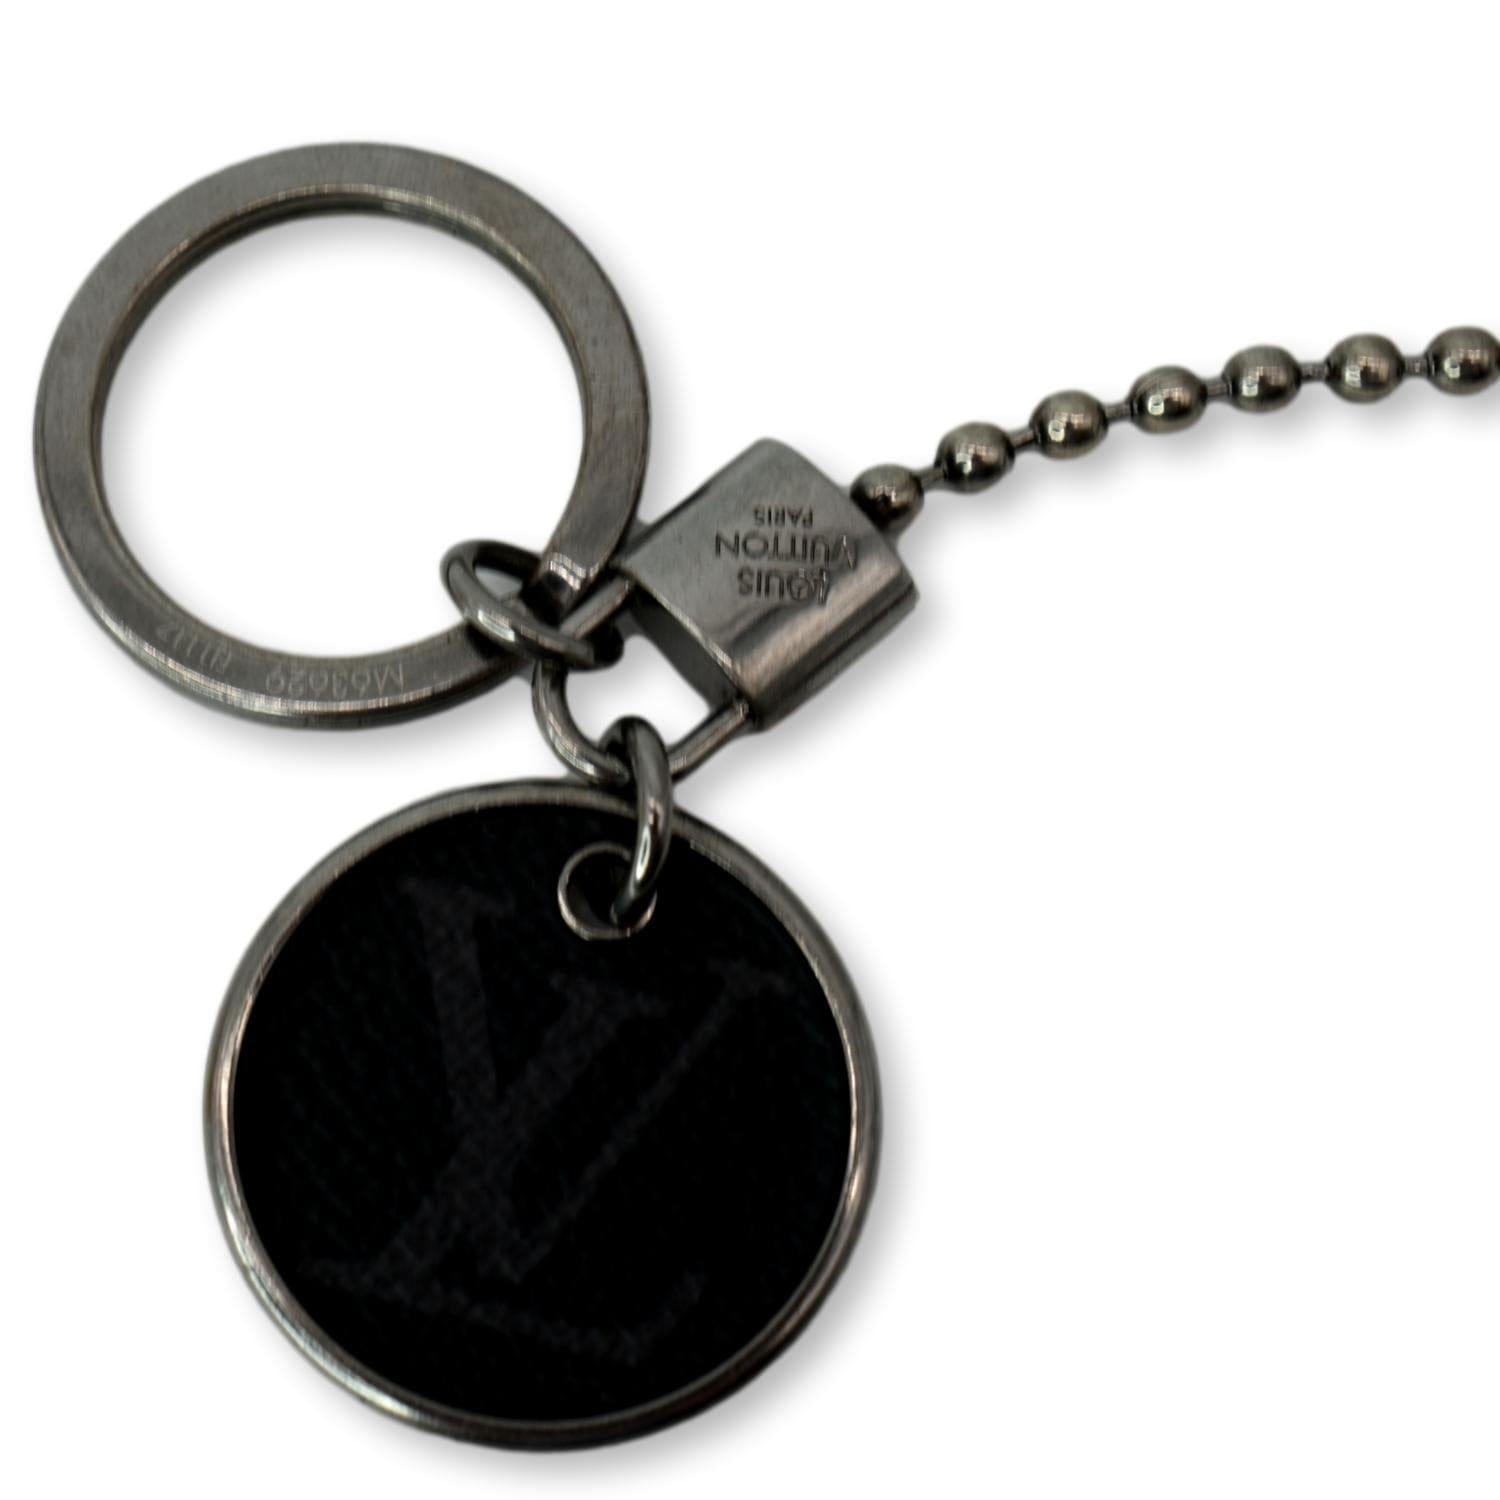 Louis Vuitton Monogram Chain Bracelet Silver/Black/Ruthenium in Stainless  Steel - US